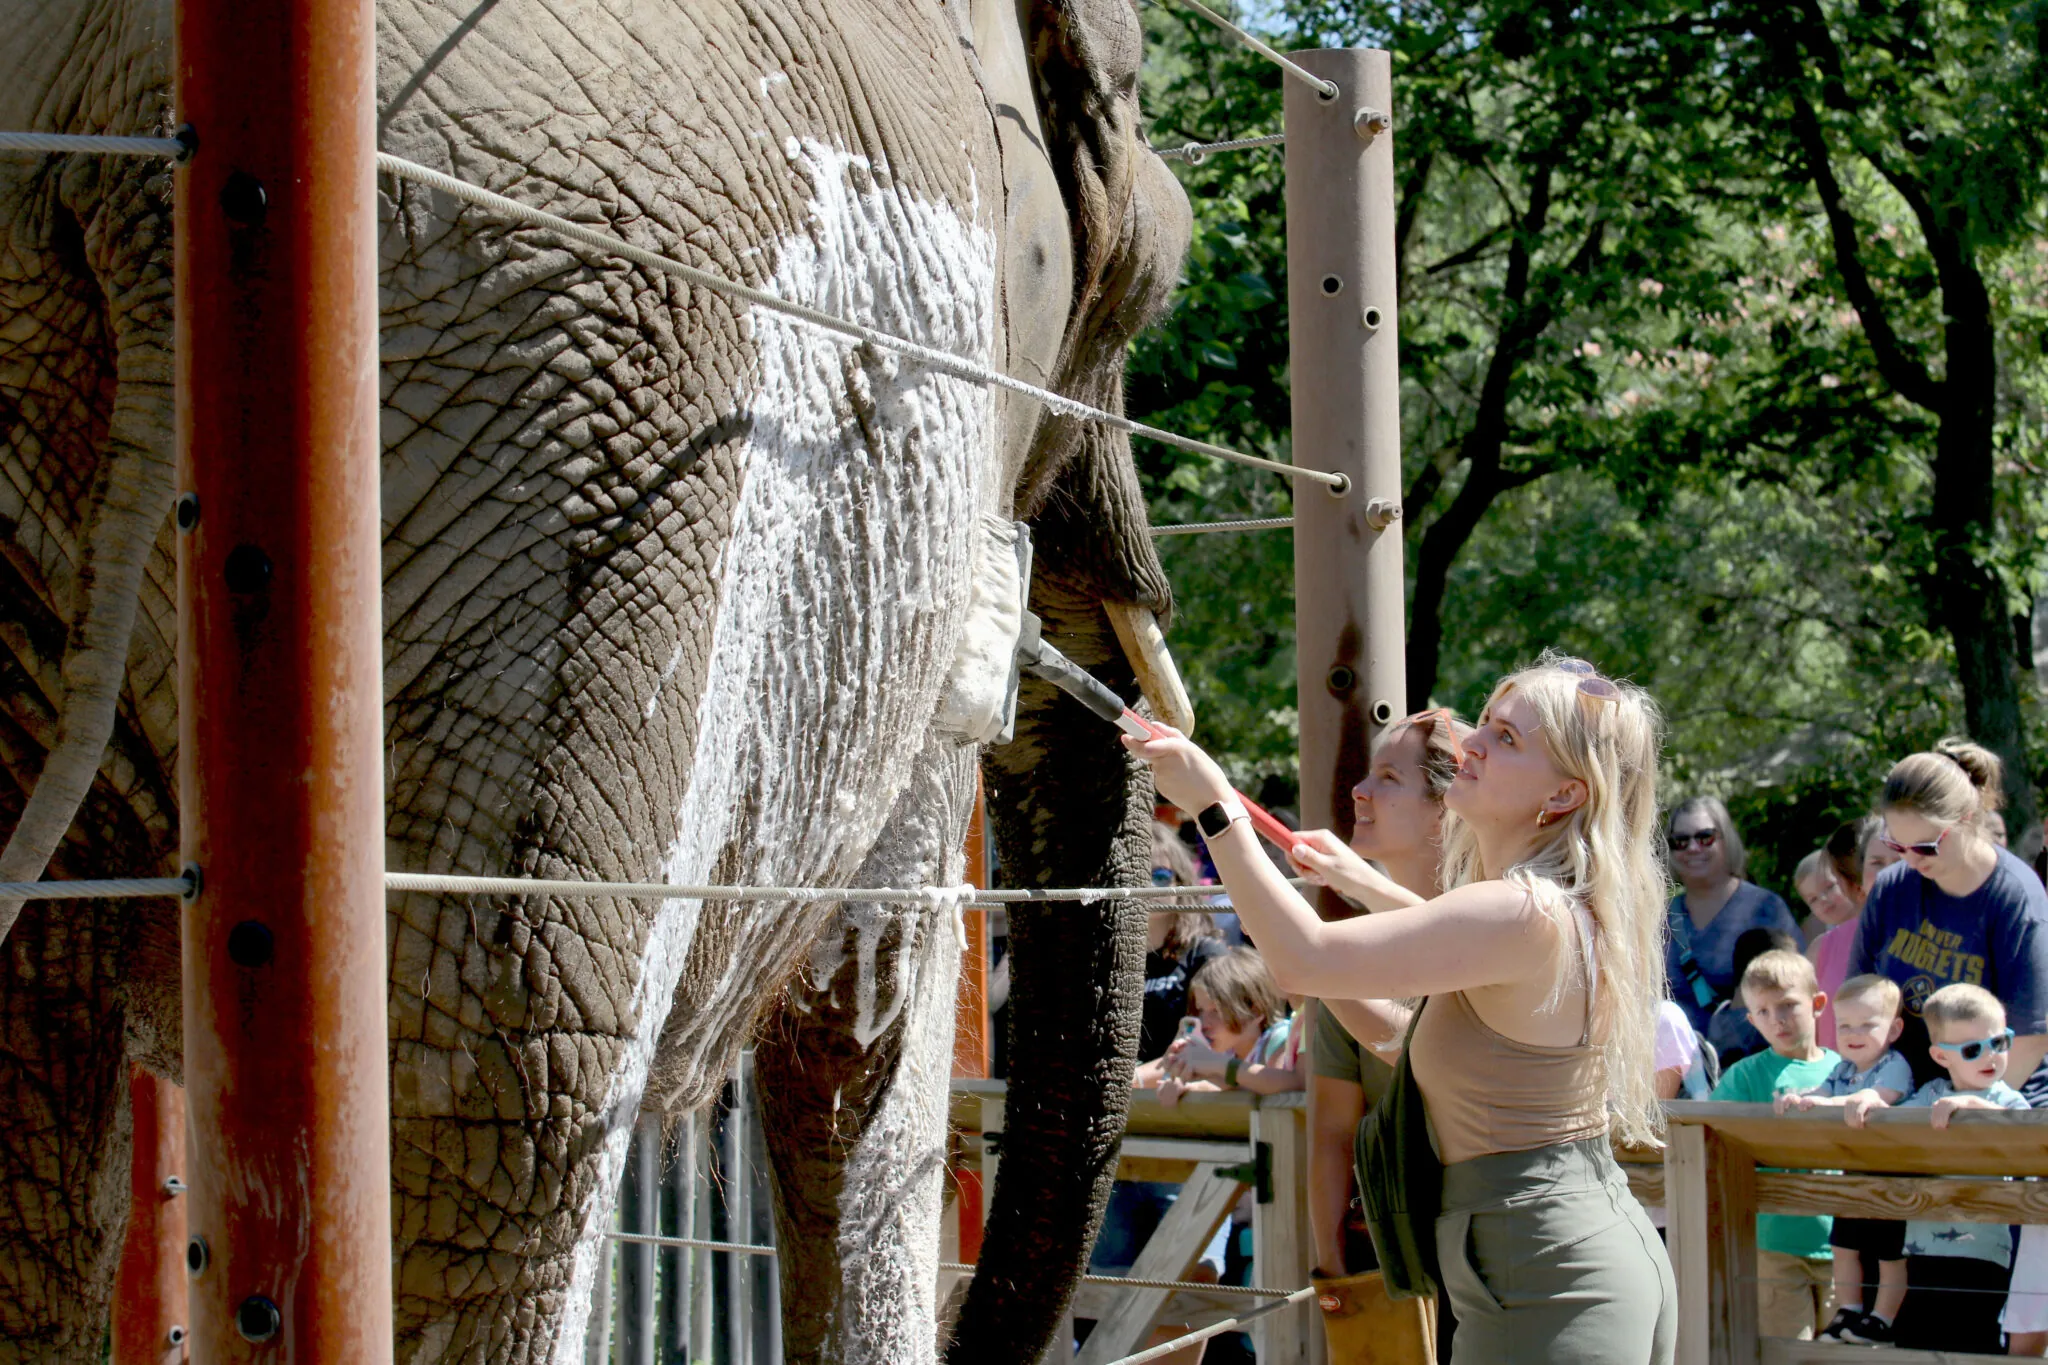 Two women scrubbing an elephant with a long brush